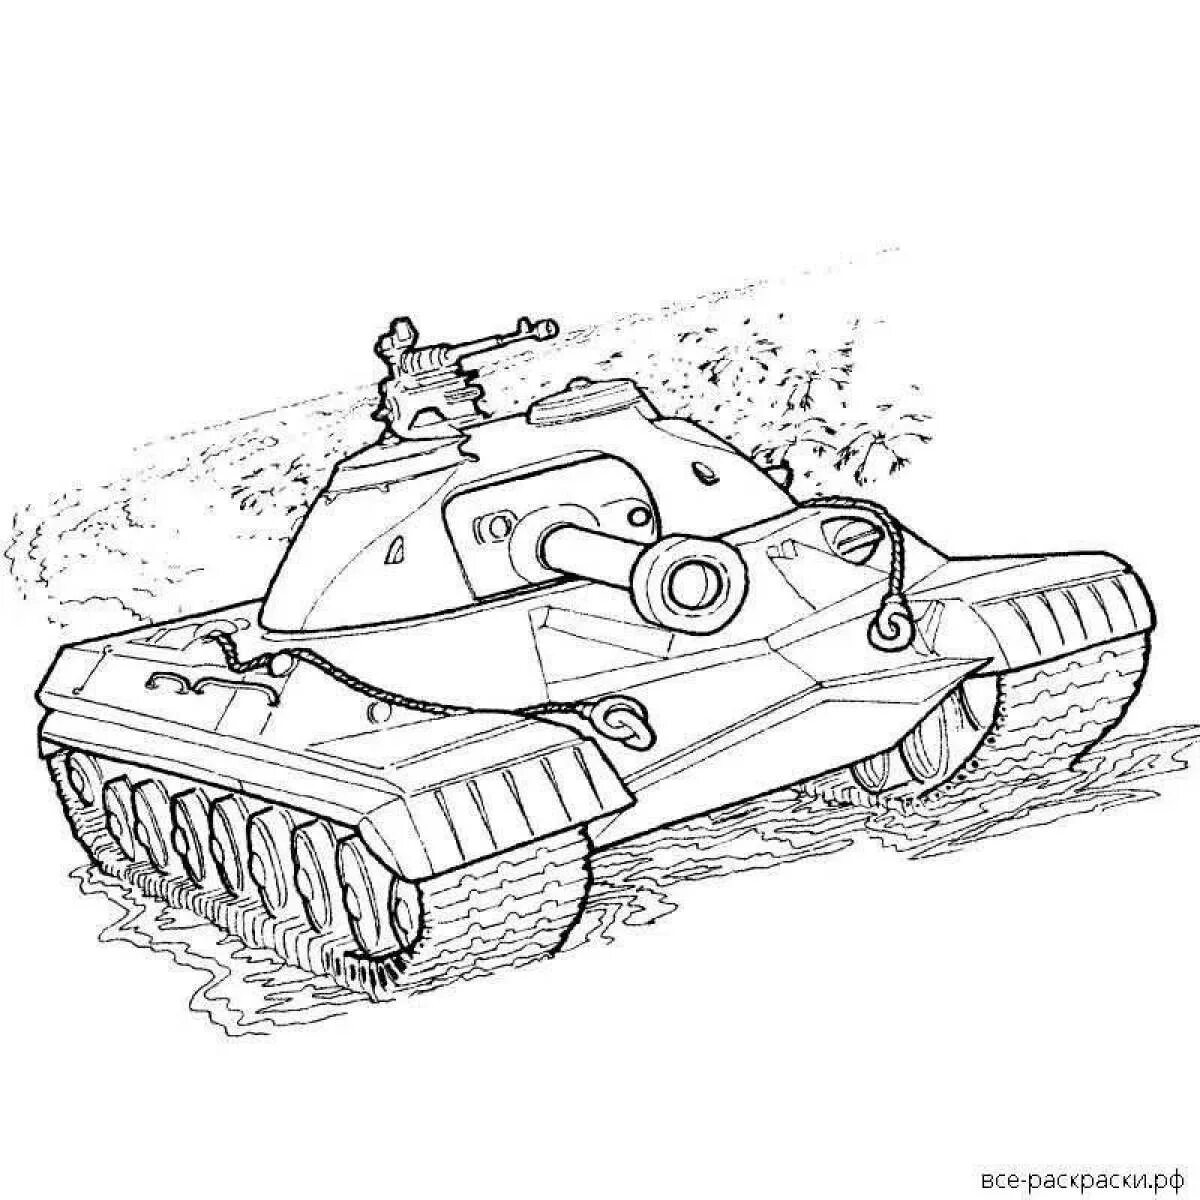 Блиц рисунок. Раскраски танков World of Tanks ис7. Раскраски танков World of Tanks т34. Раскраски танки ворлд оф танк ис7. Раскраски World of Tanks Маус.